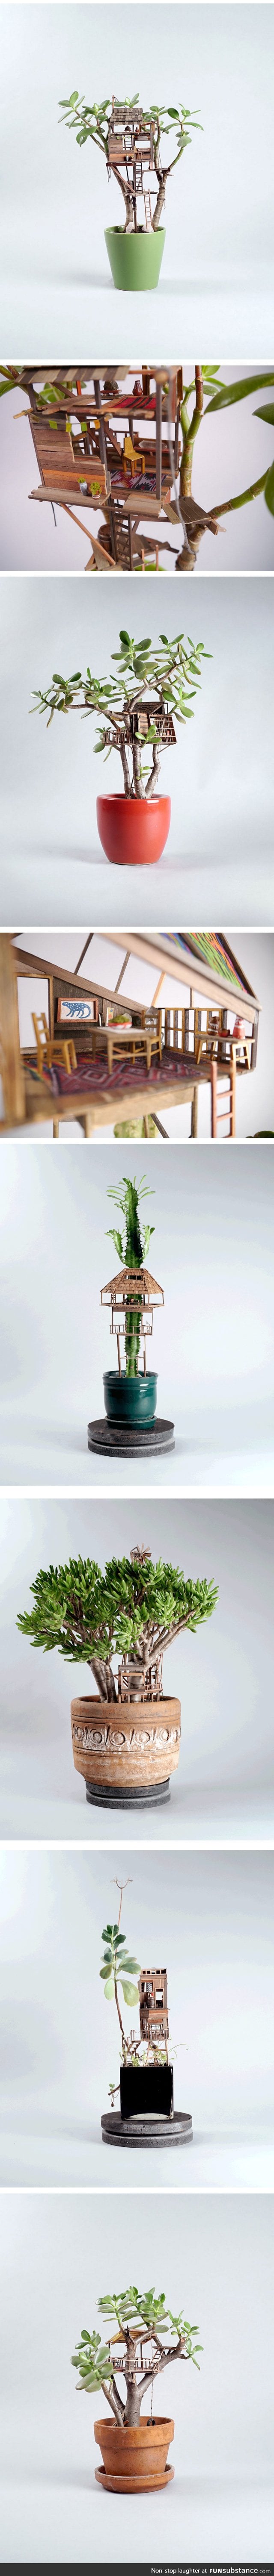 Miniature Tree Houses Make Houseplants Way More Interesting